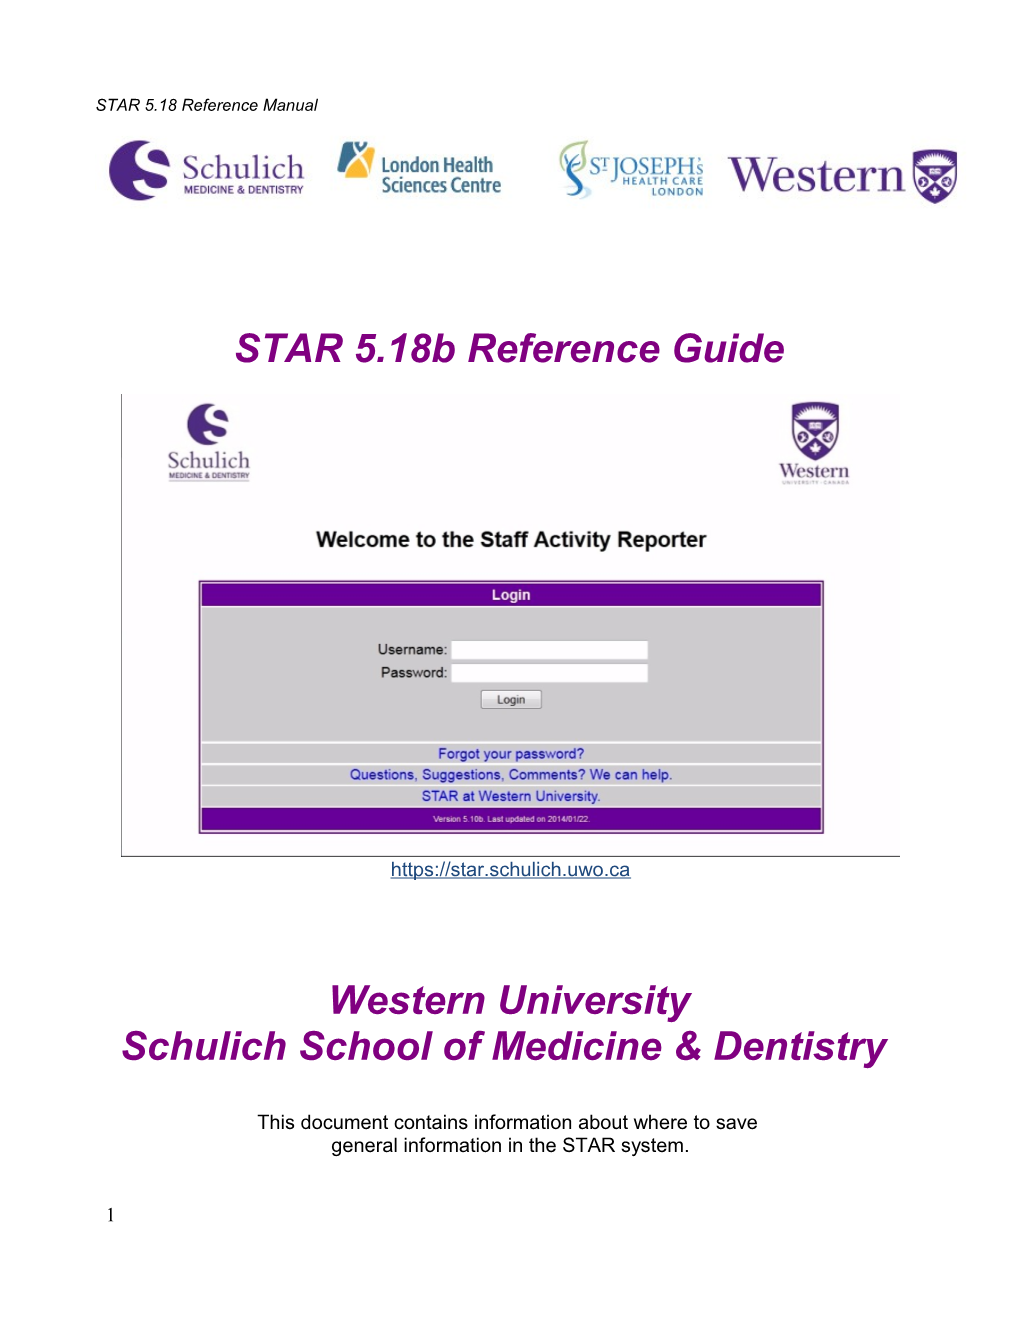 Western University Schulich School of Medicine & Dentistry